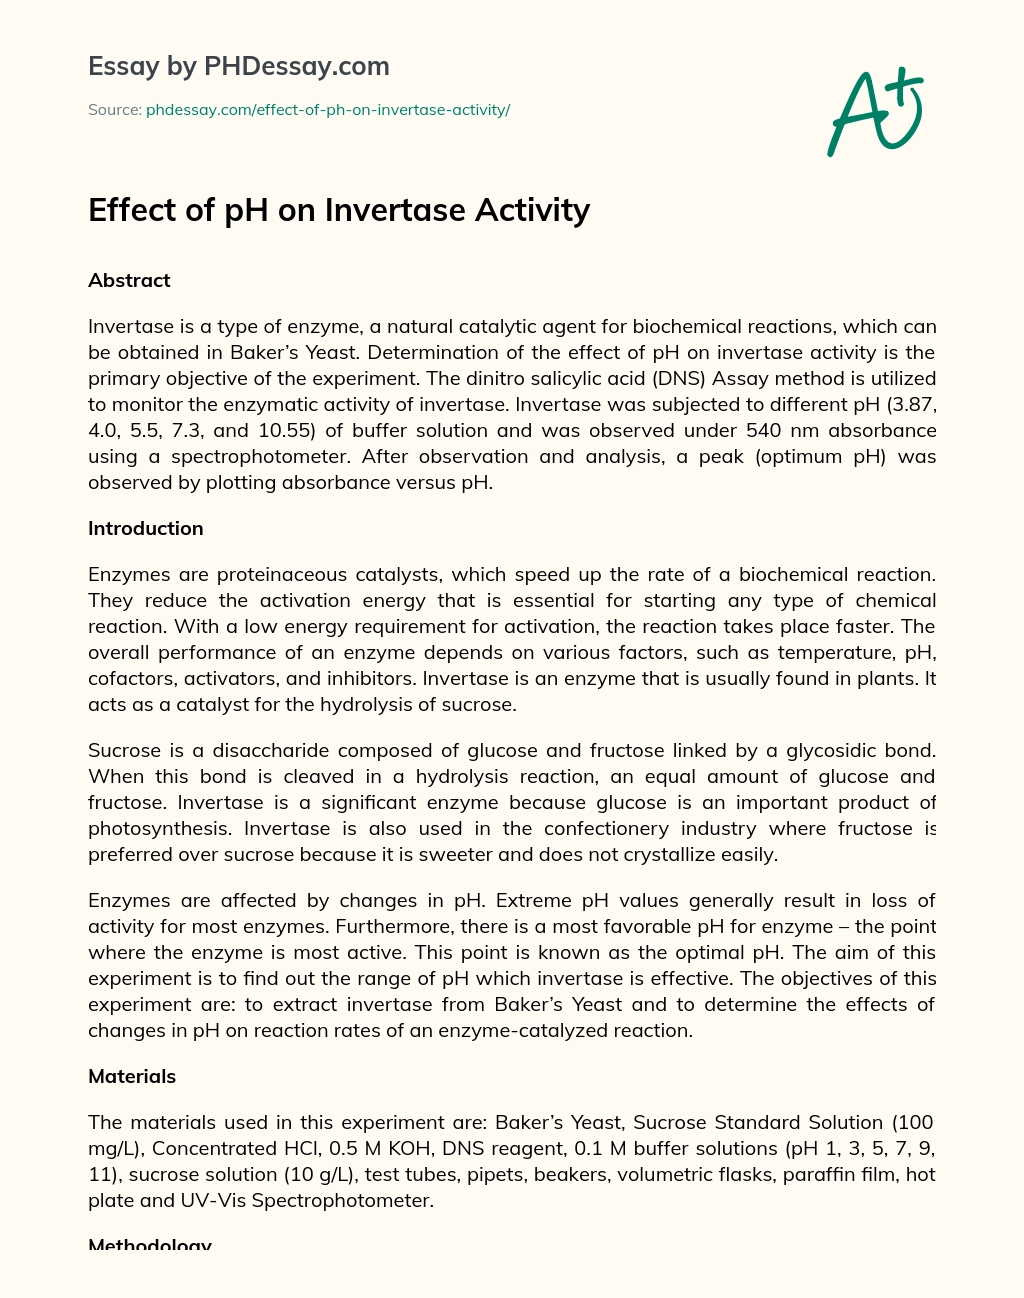 Effect of pH on Invertase Activity essay